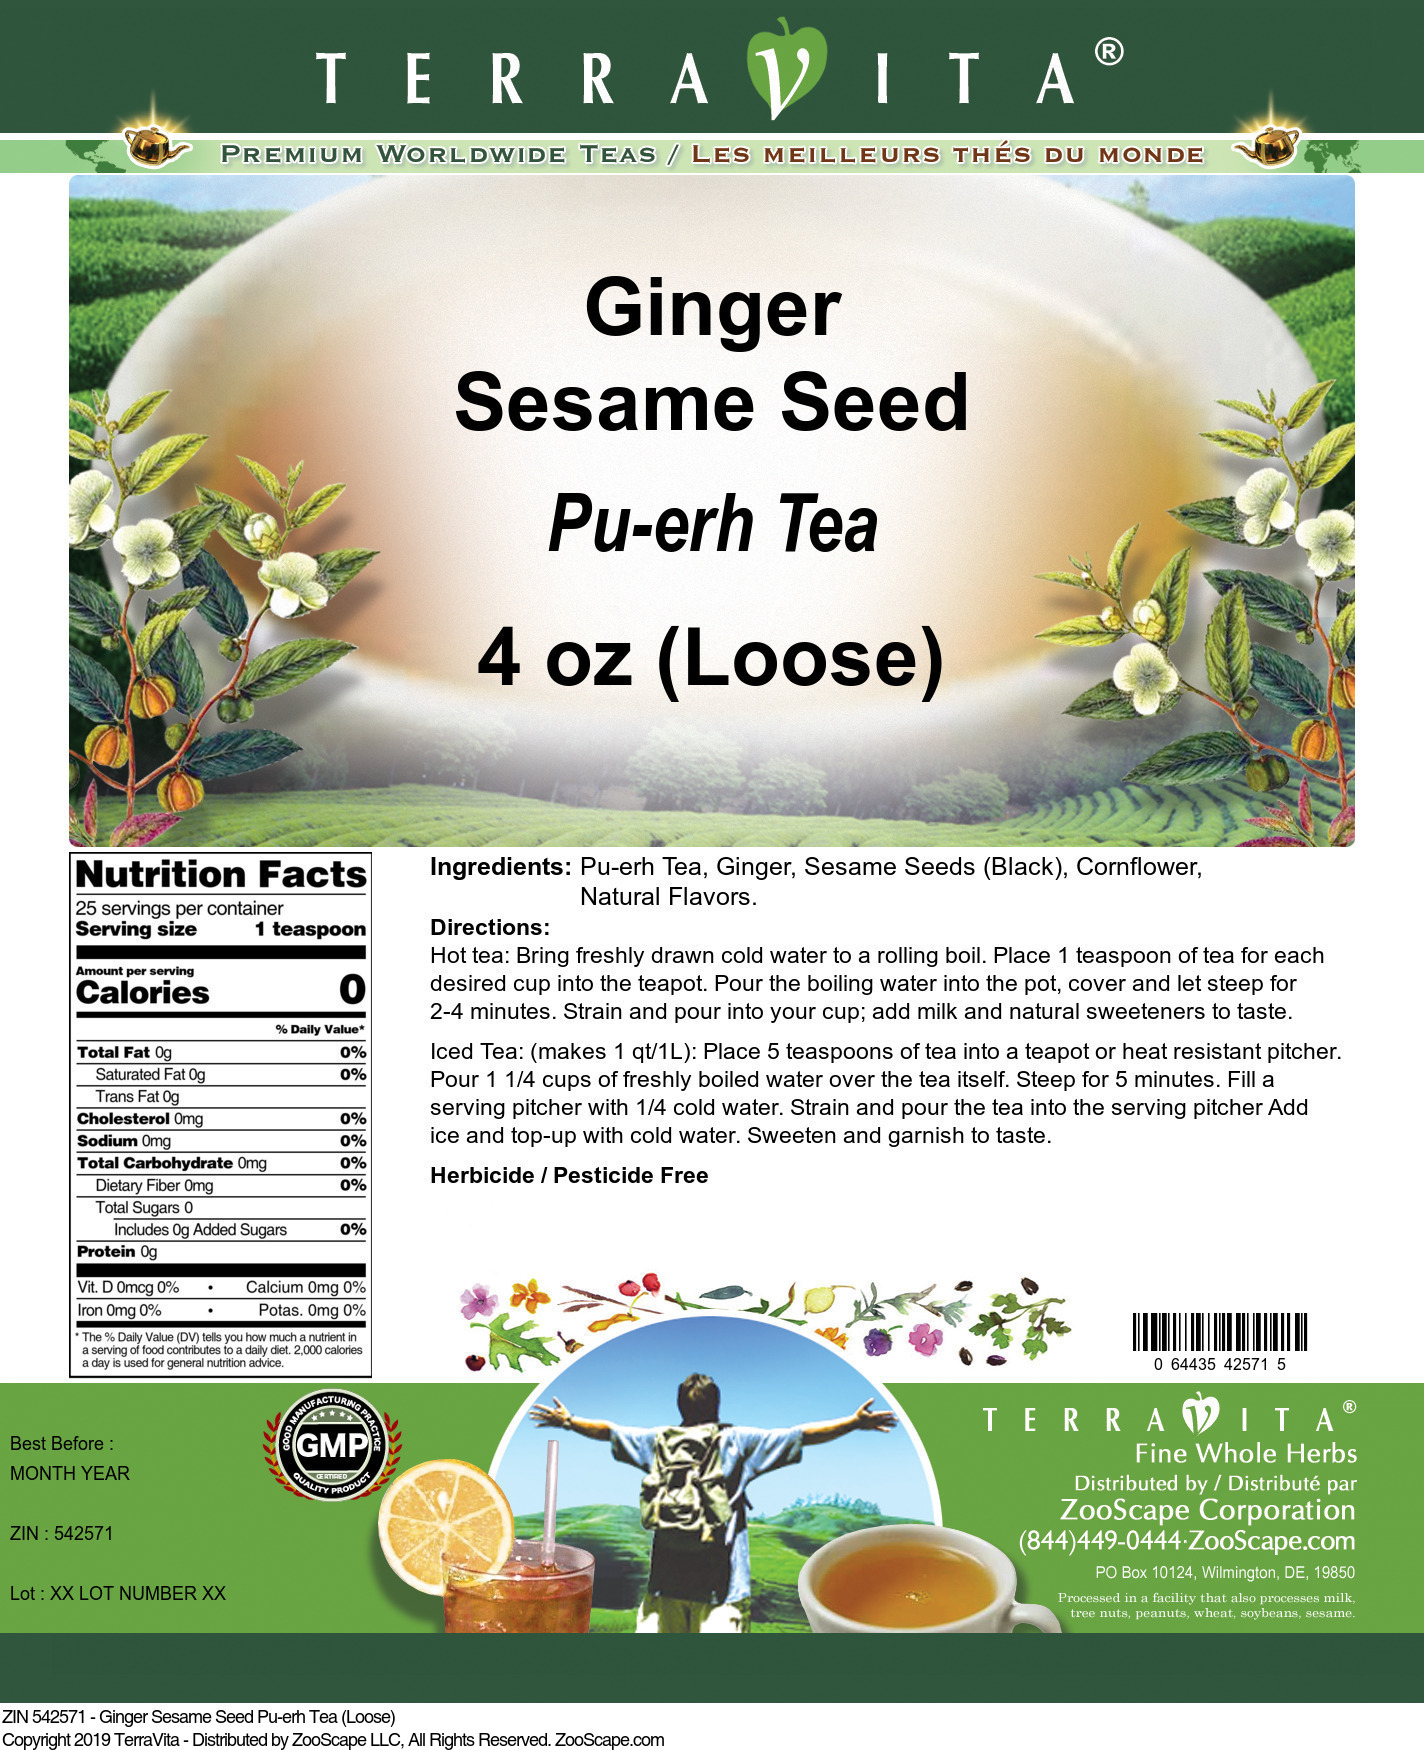 Ginger Sesame Seed Pu-erh Tea (Loose) - Label